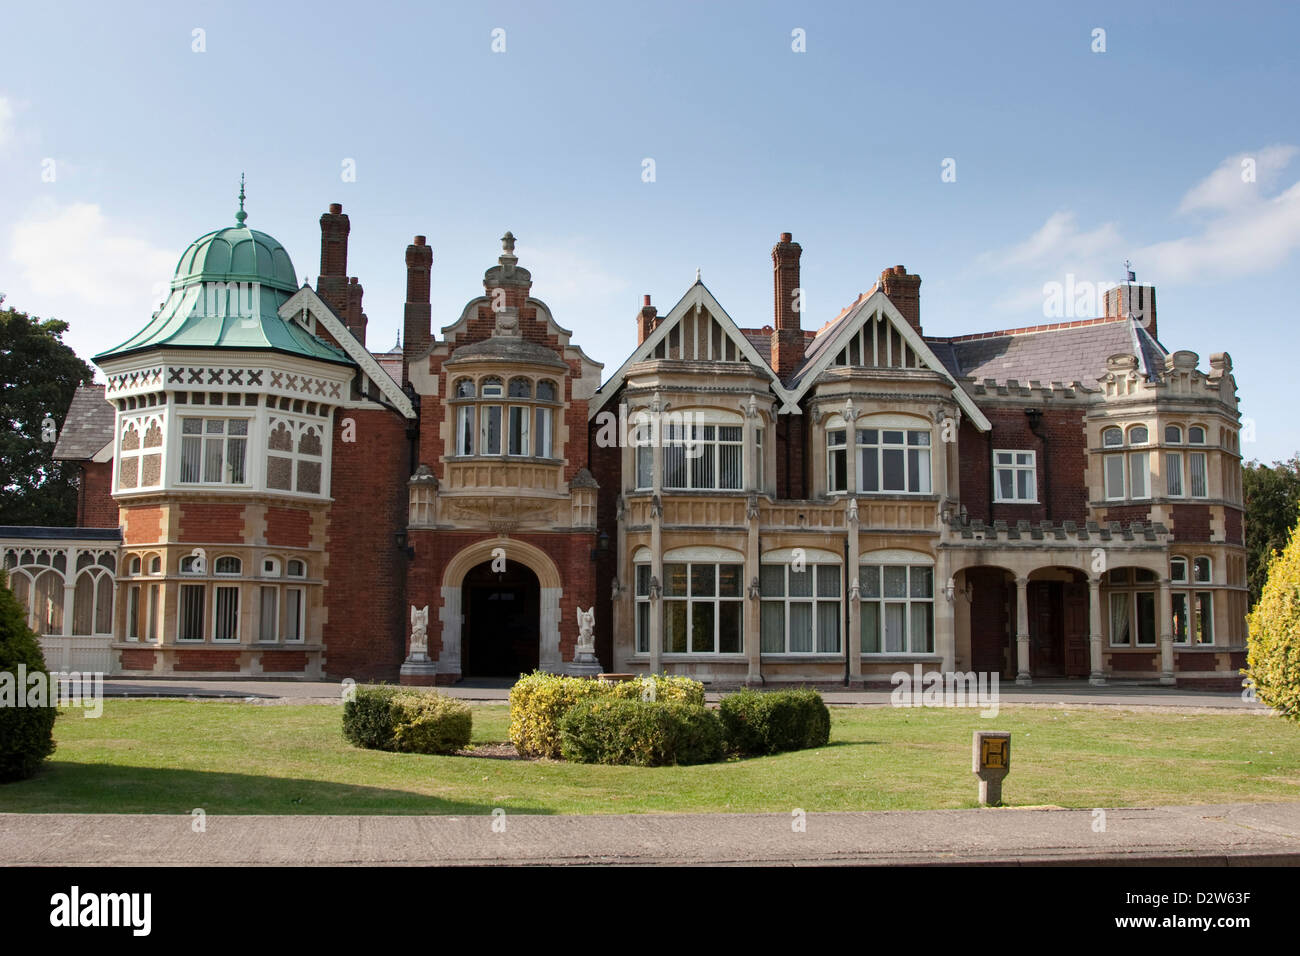 Bletchley Park Mansion, Bletchley, England. Stock Photo